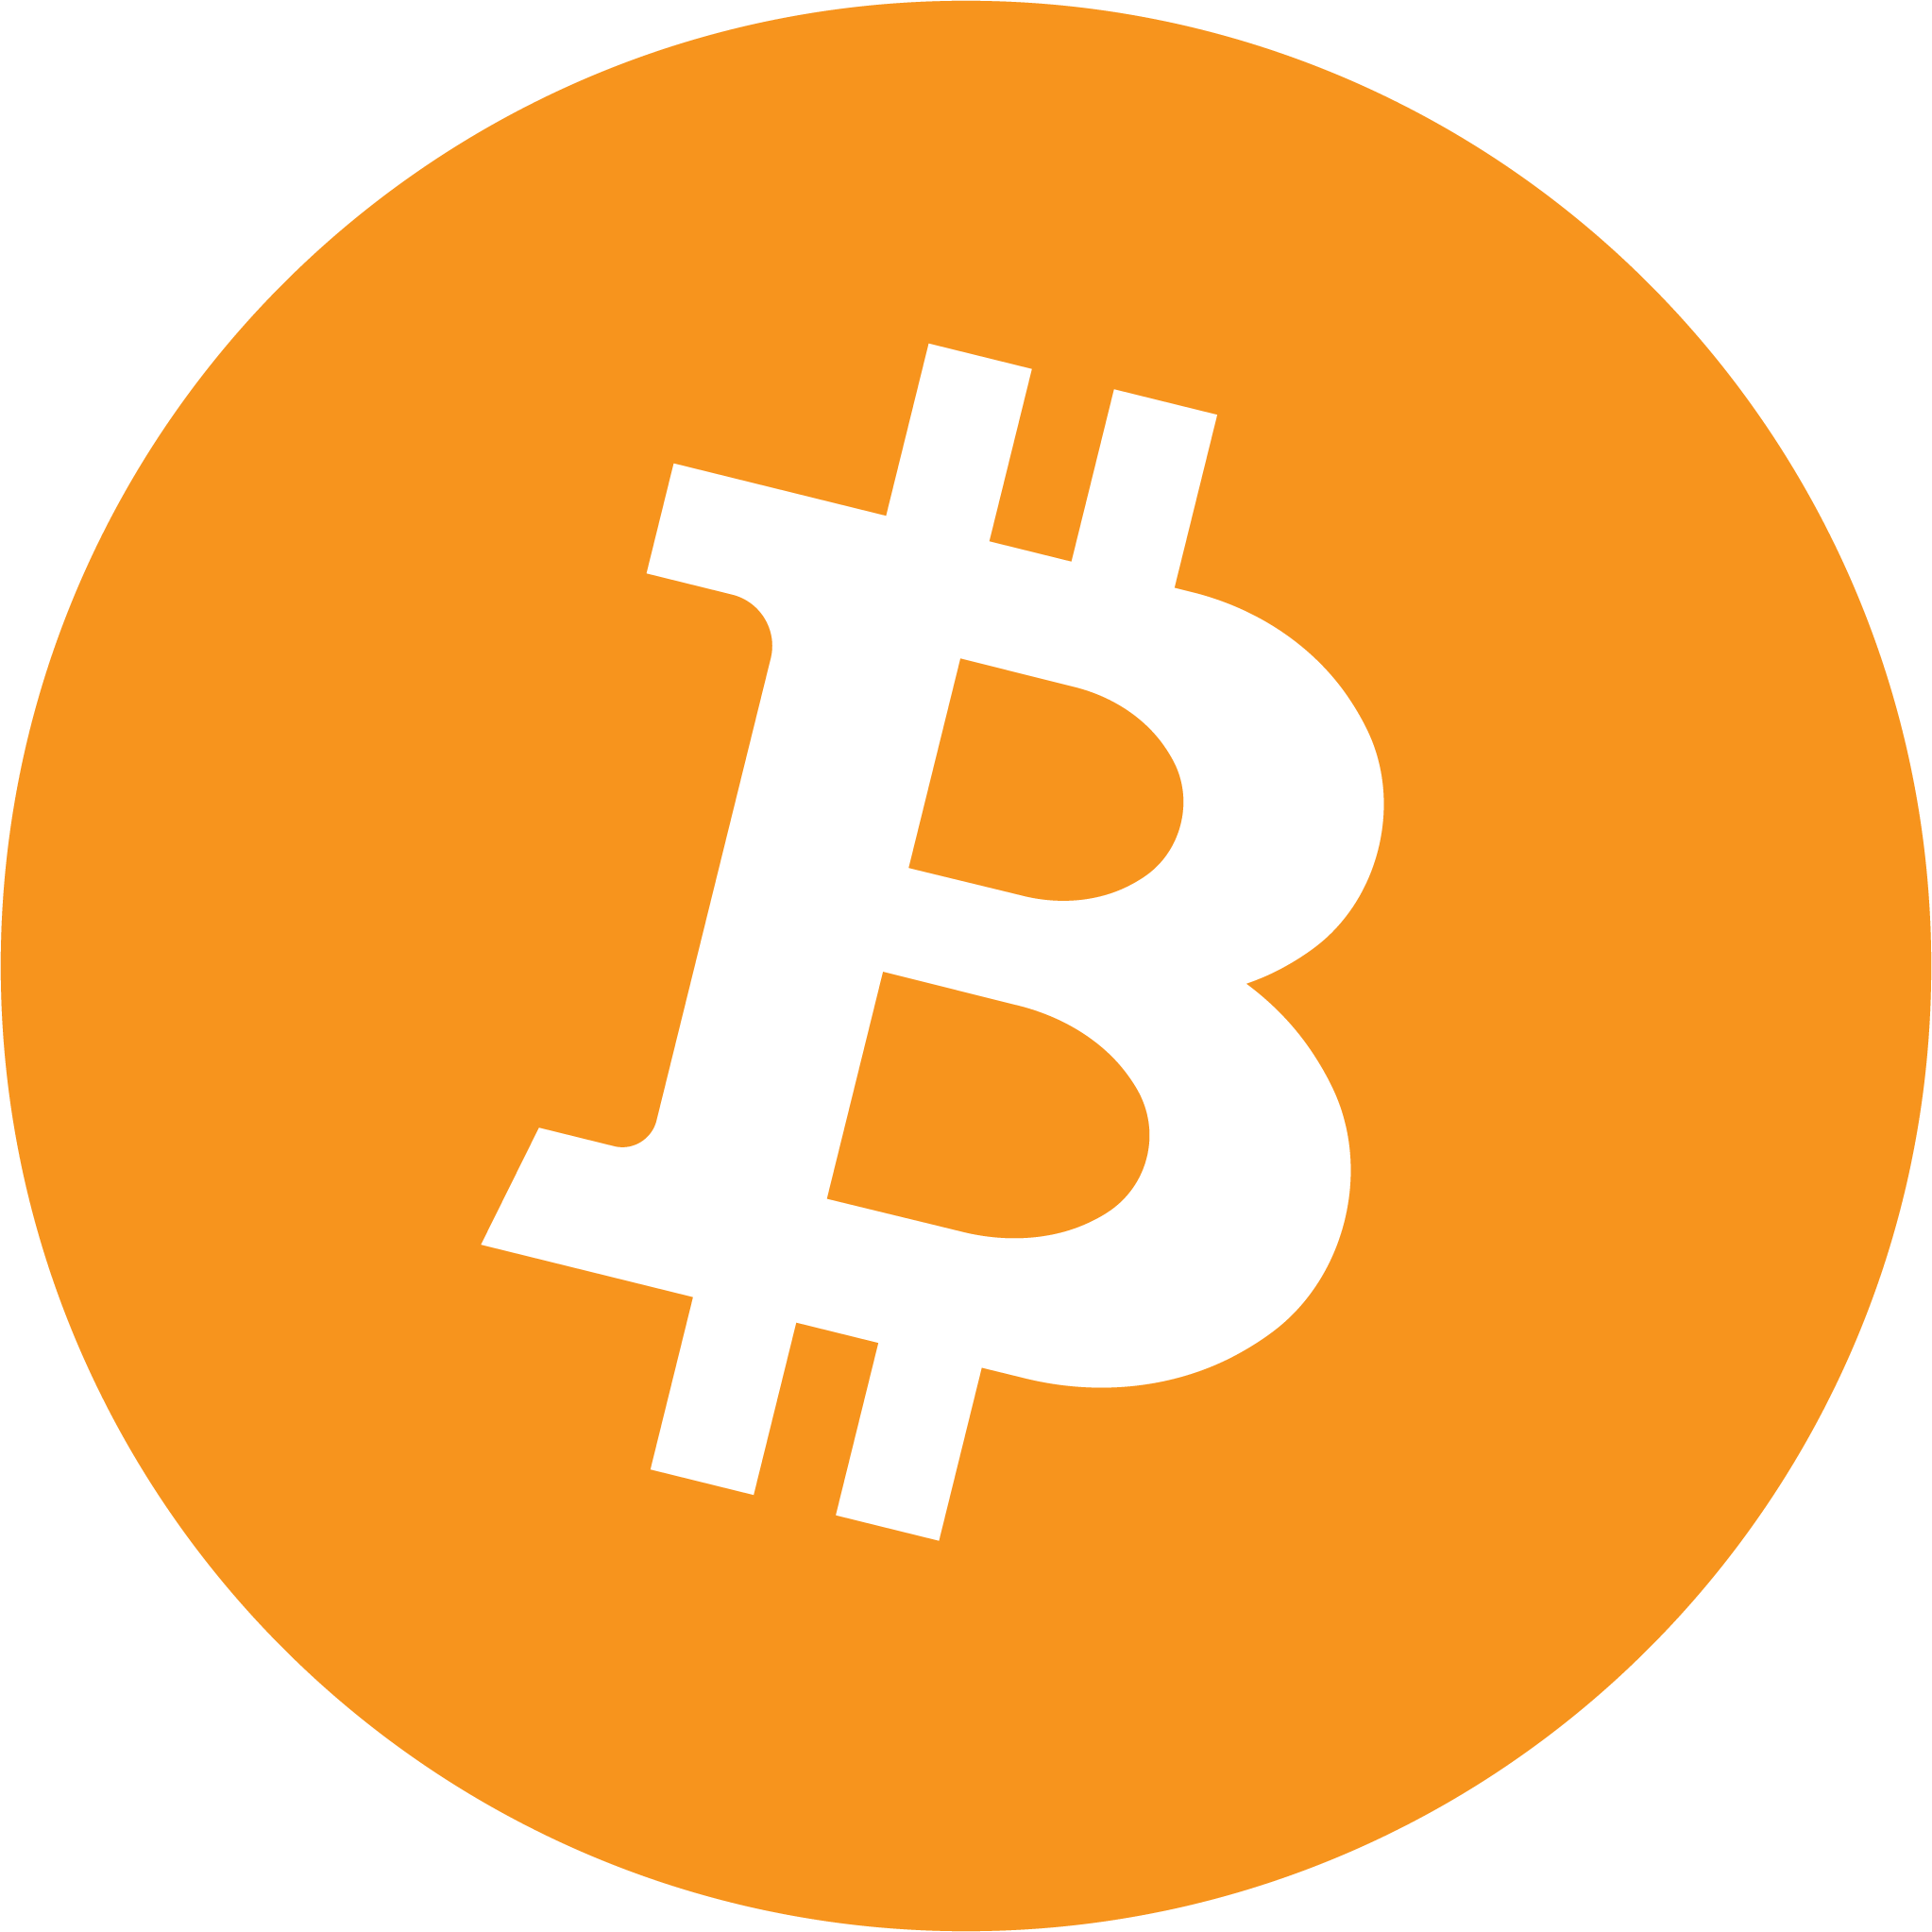 Orange Circle It Logo - Bitcoin Symbol and Logo Origins